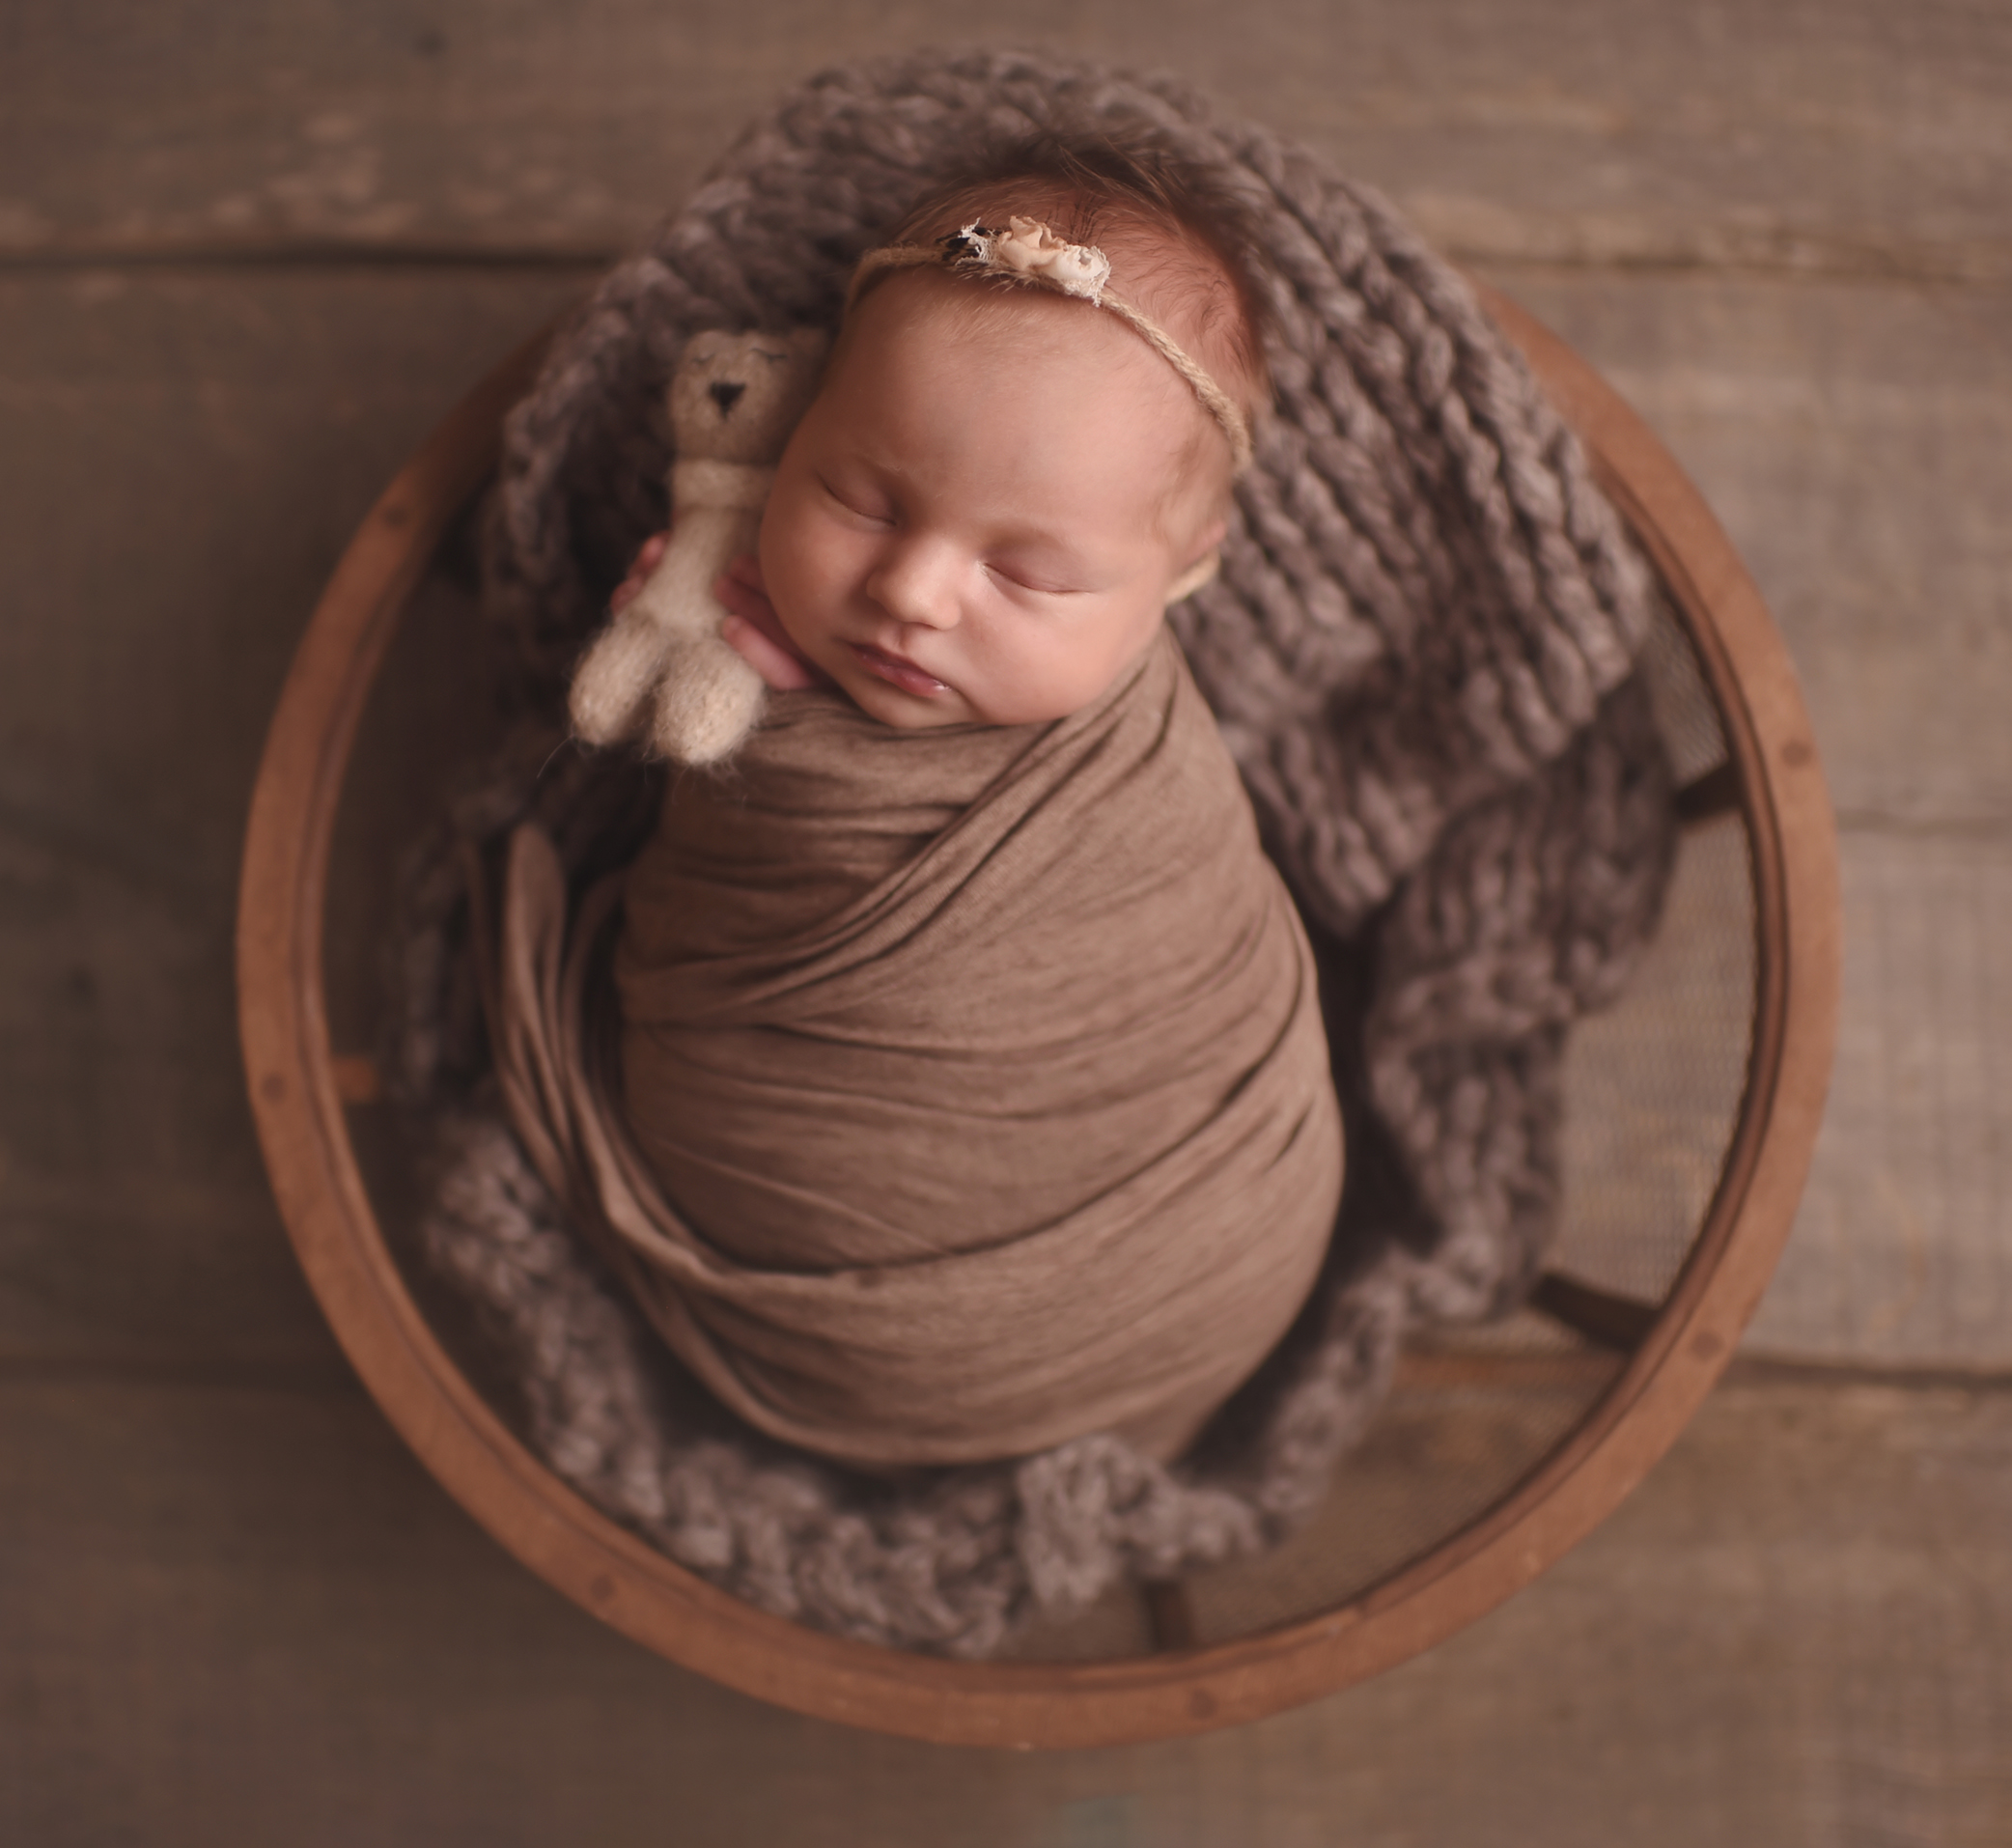 newborn baby girl in the wooden basket